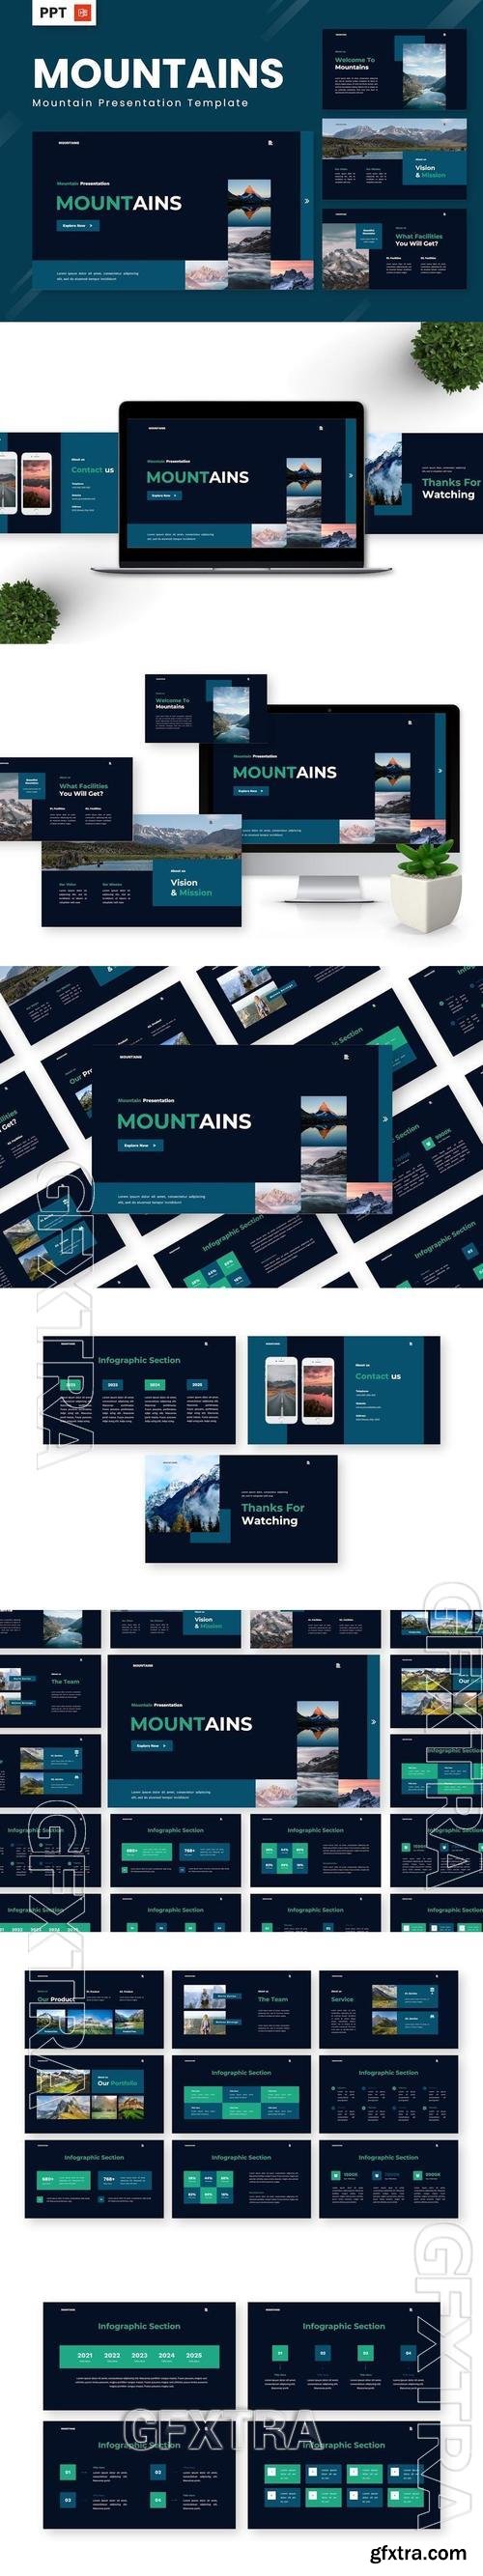 Mountains - Mountain Powerpoint Templates ZP9UYY3